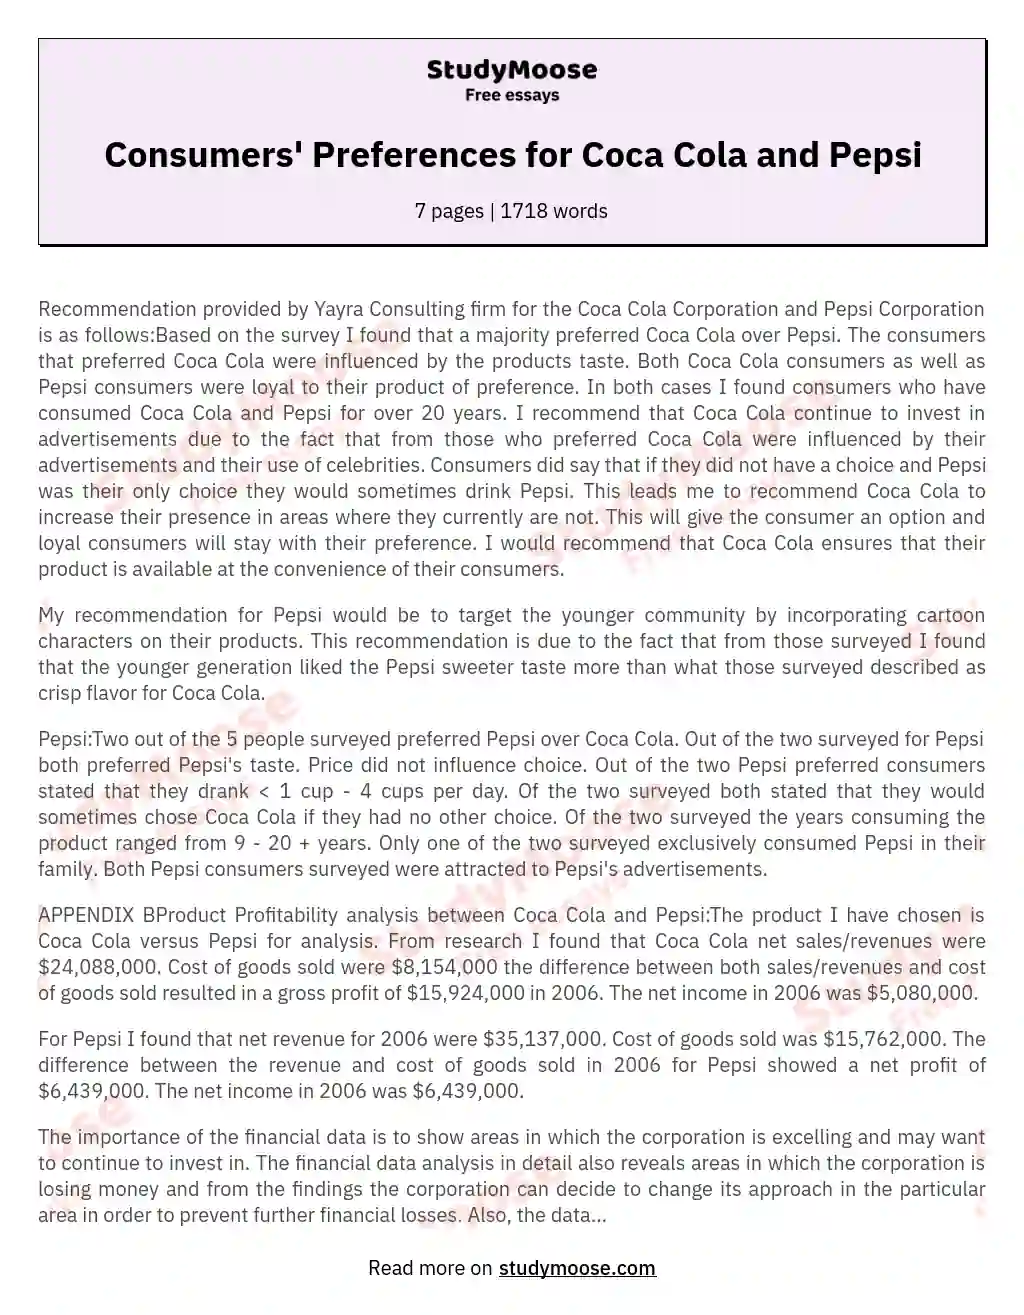 Consumers' Preferences for Coca Cola and Pepsi essay